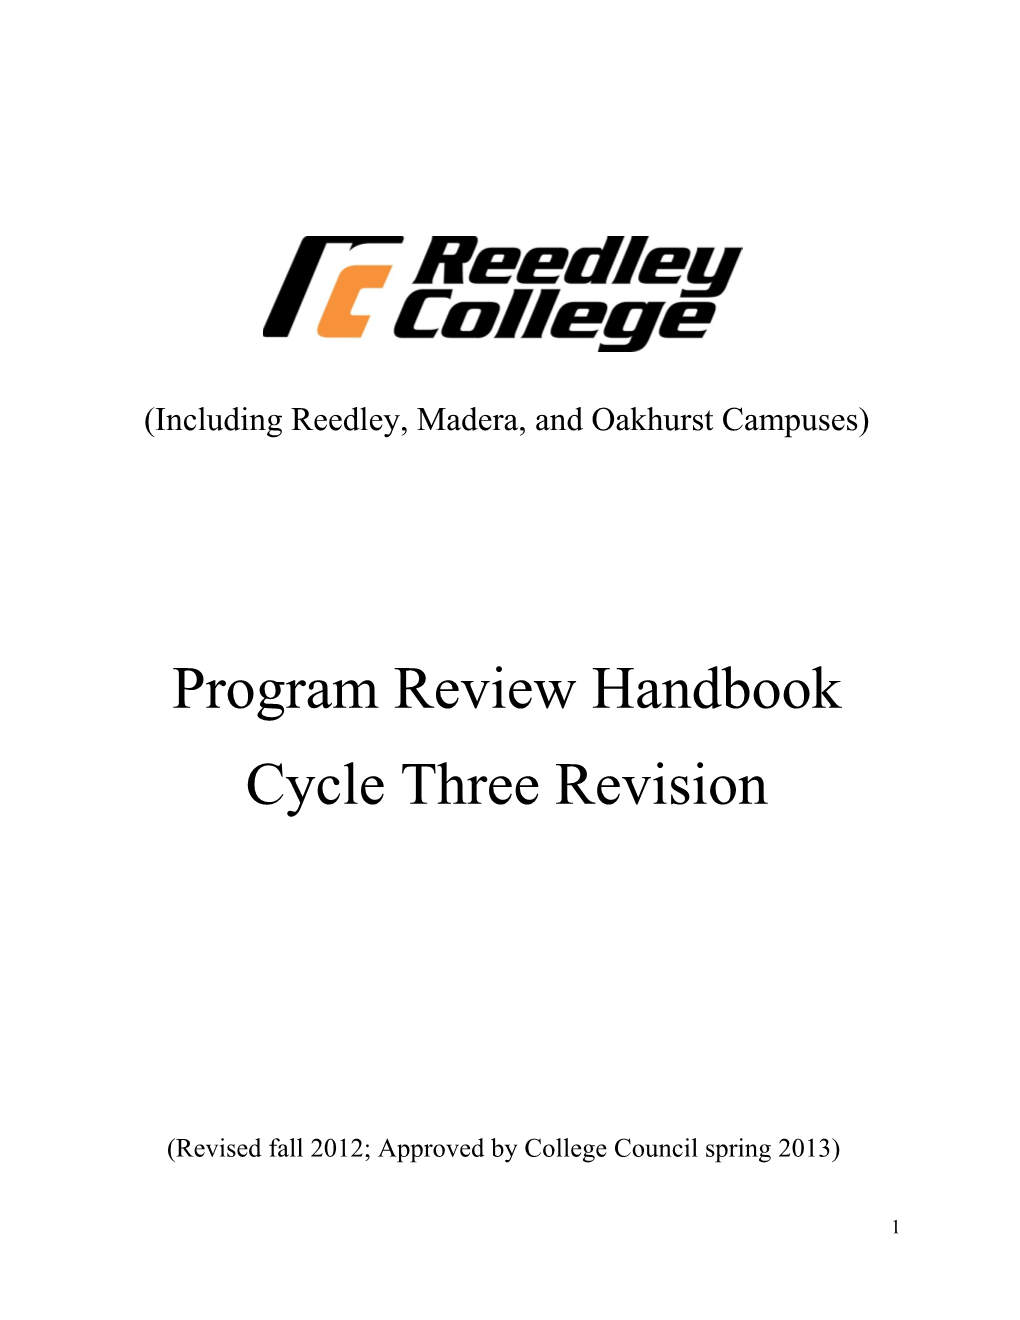 Program Review Handbookcycle Three